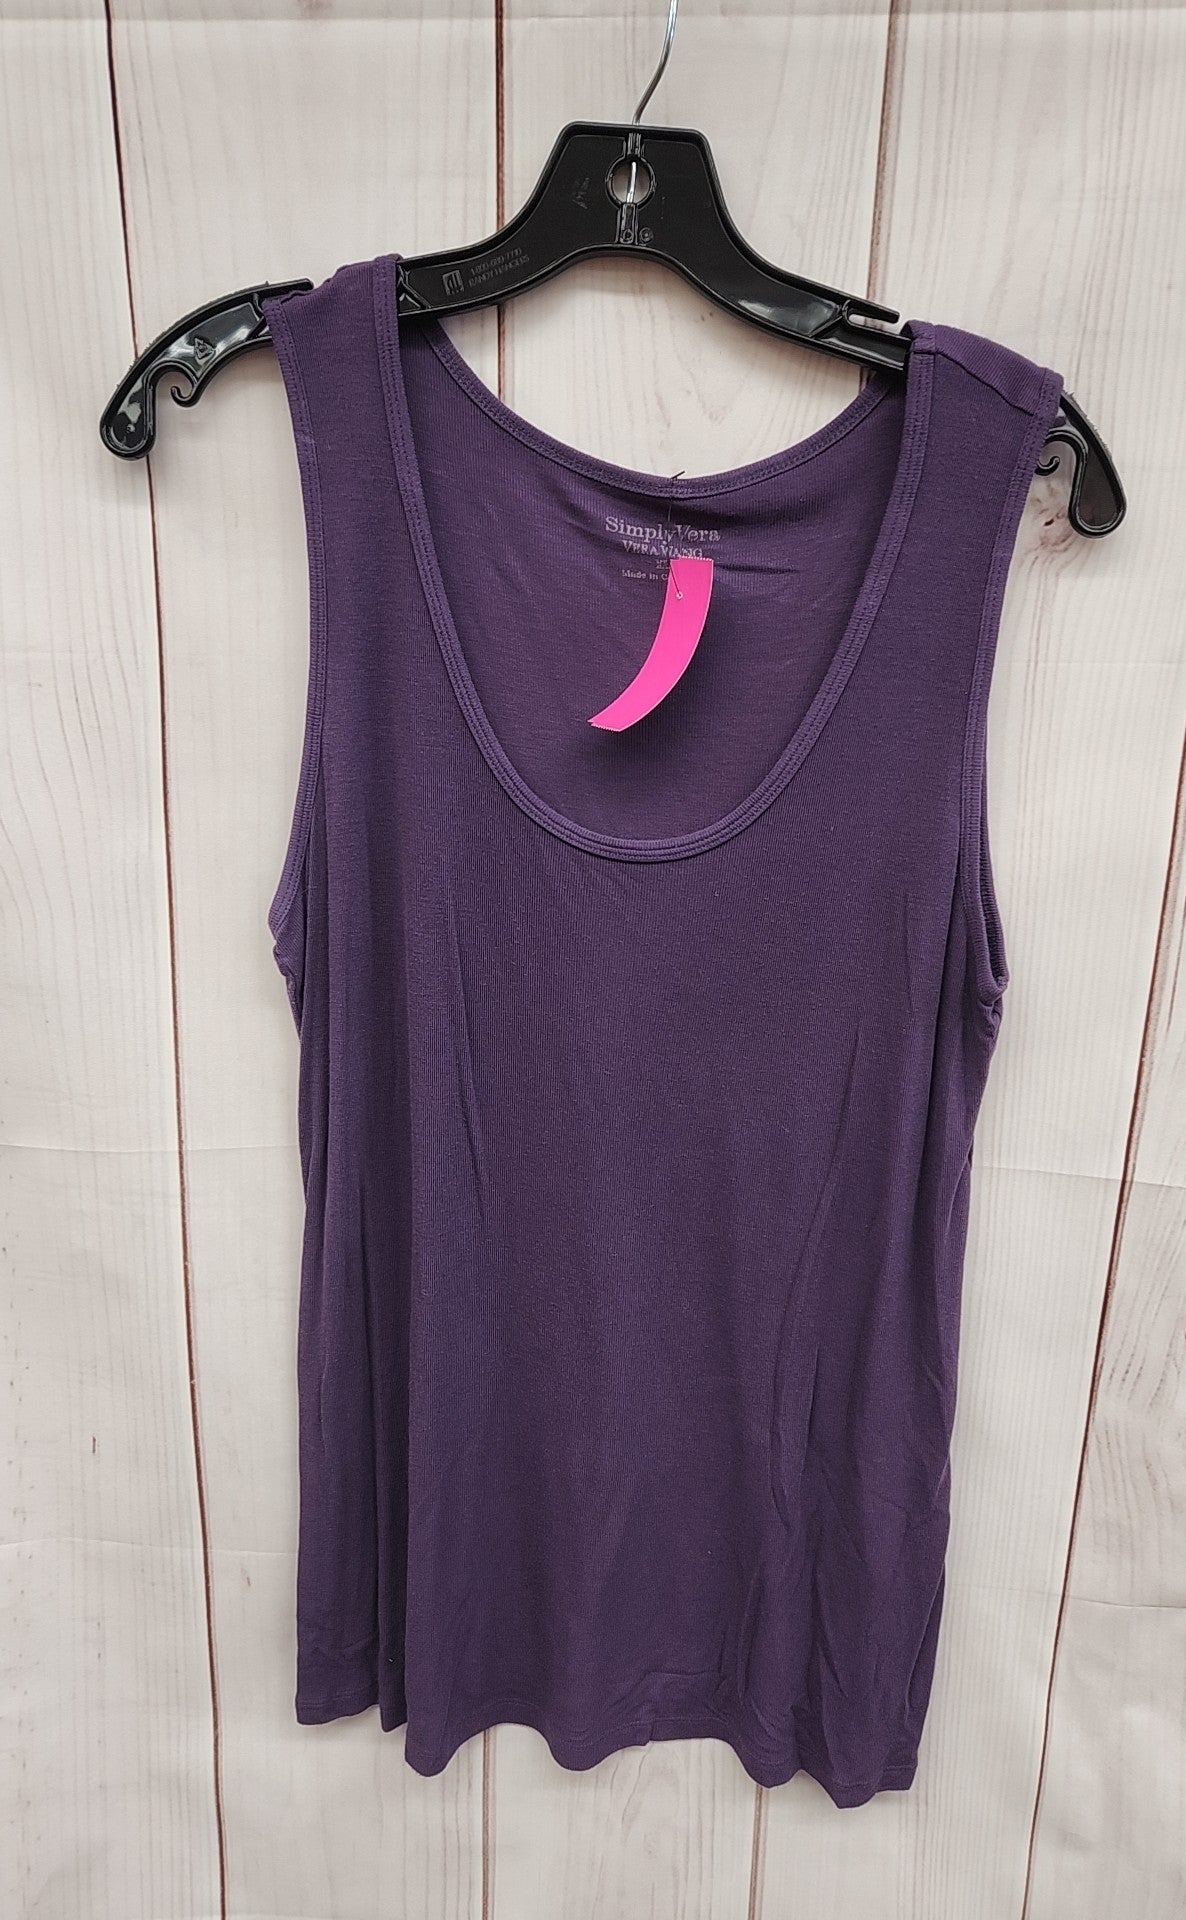 Simply Vera Women's Size XL Purple Sleeveless Top